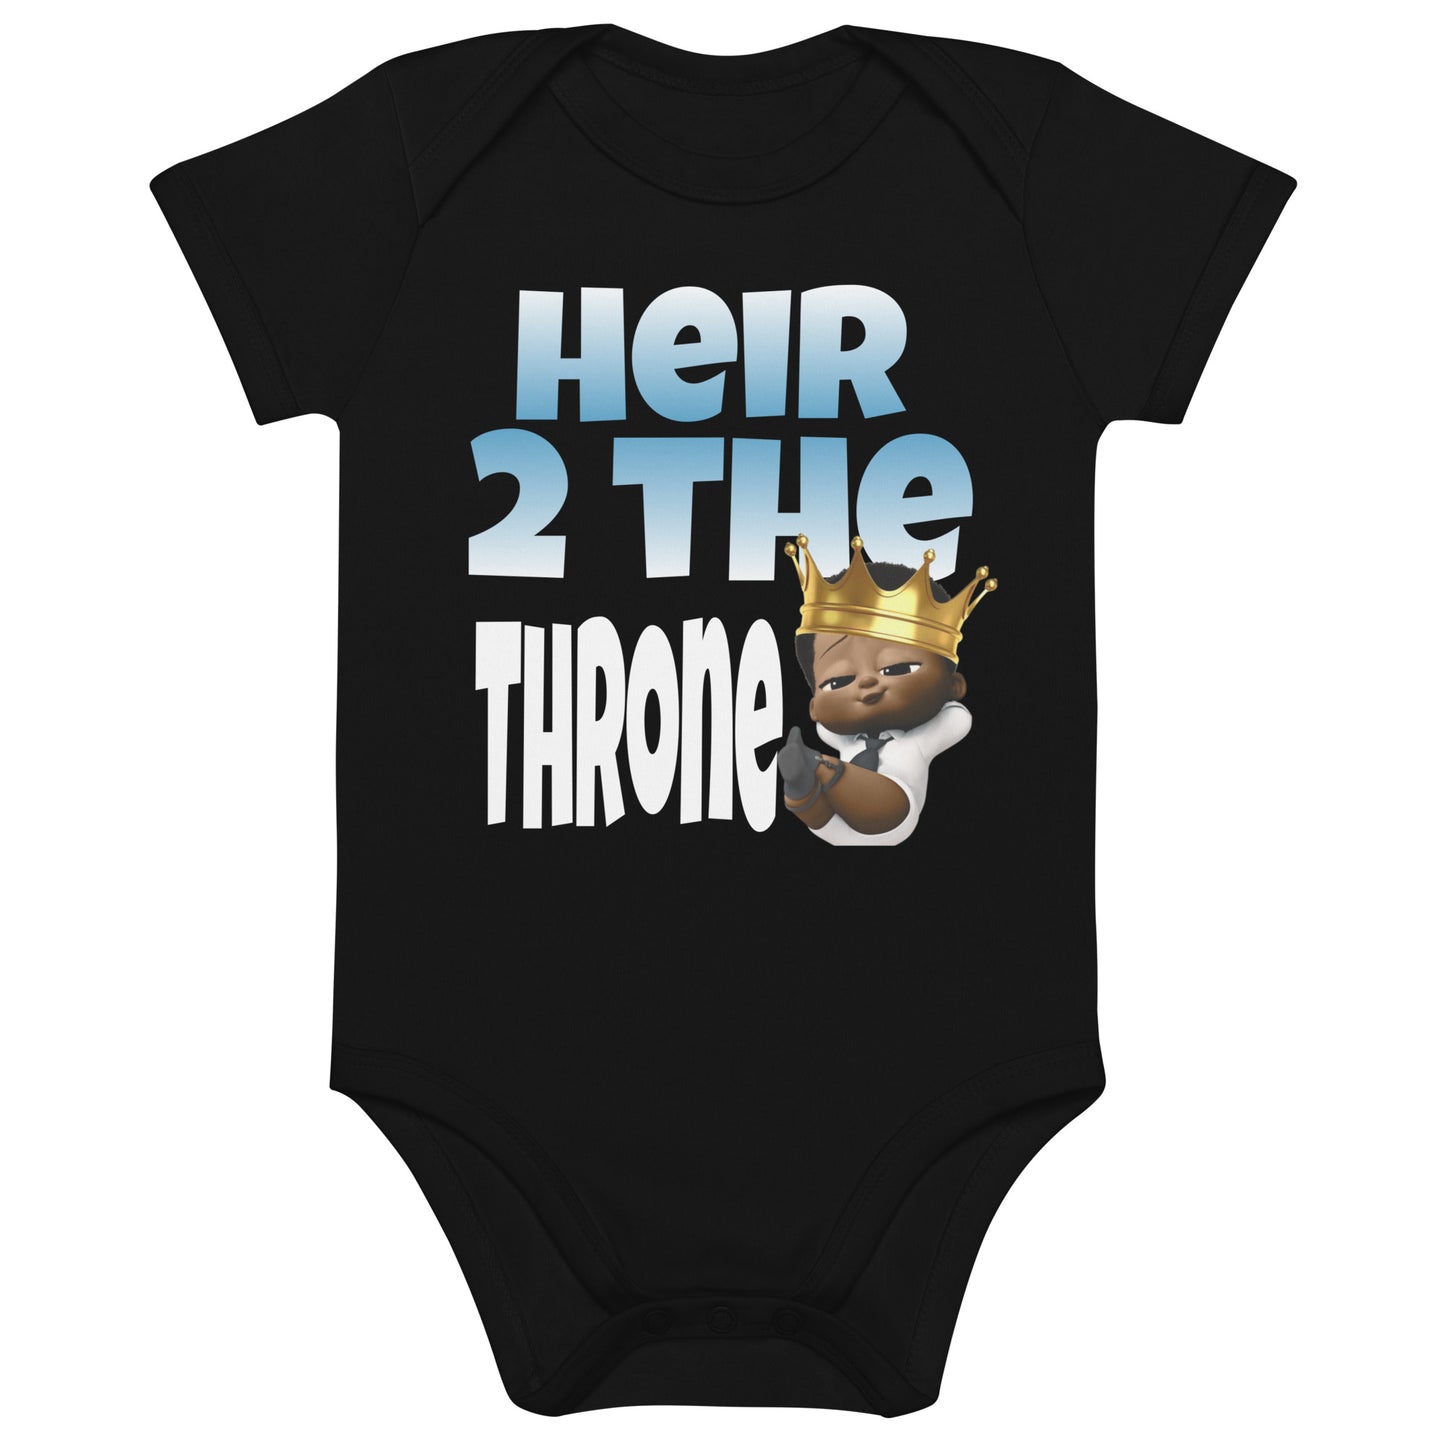 Heir to the throne cotton baby bodysuit